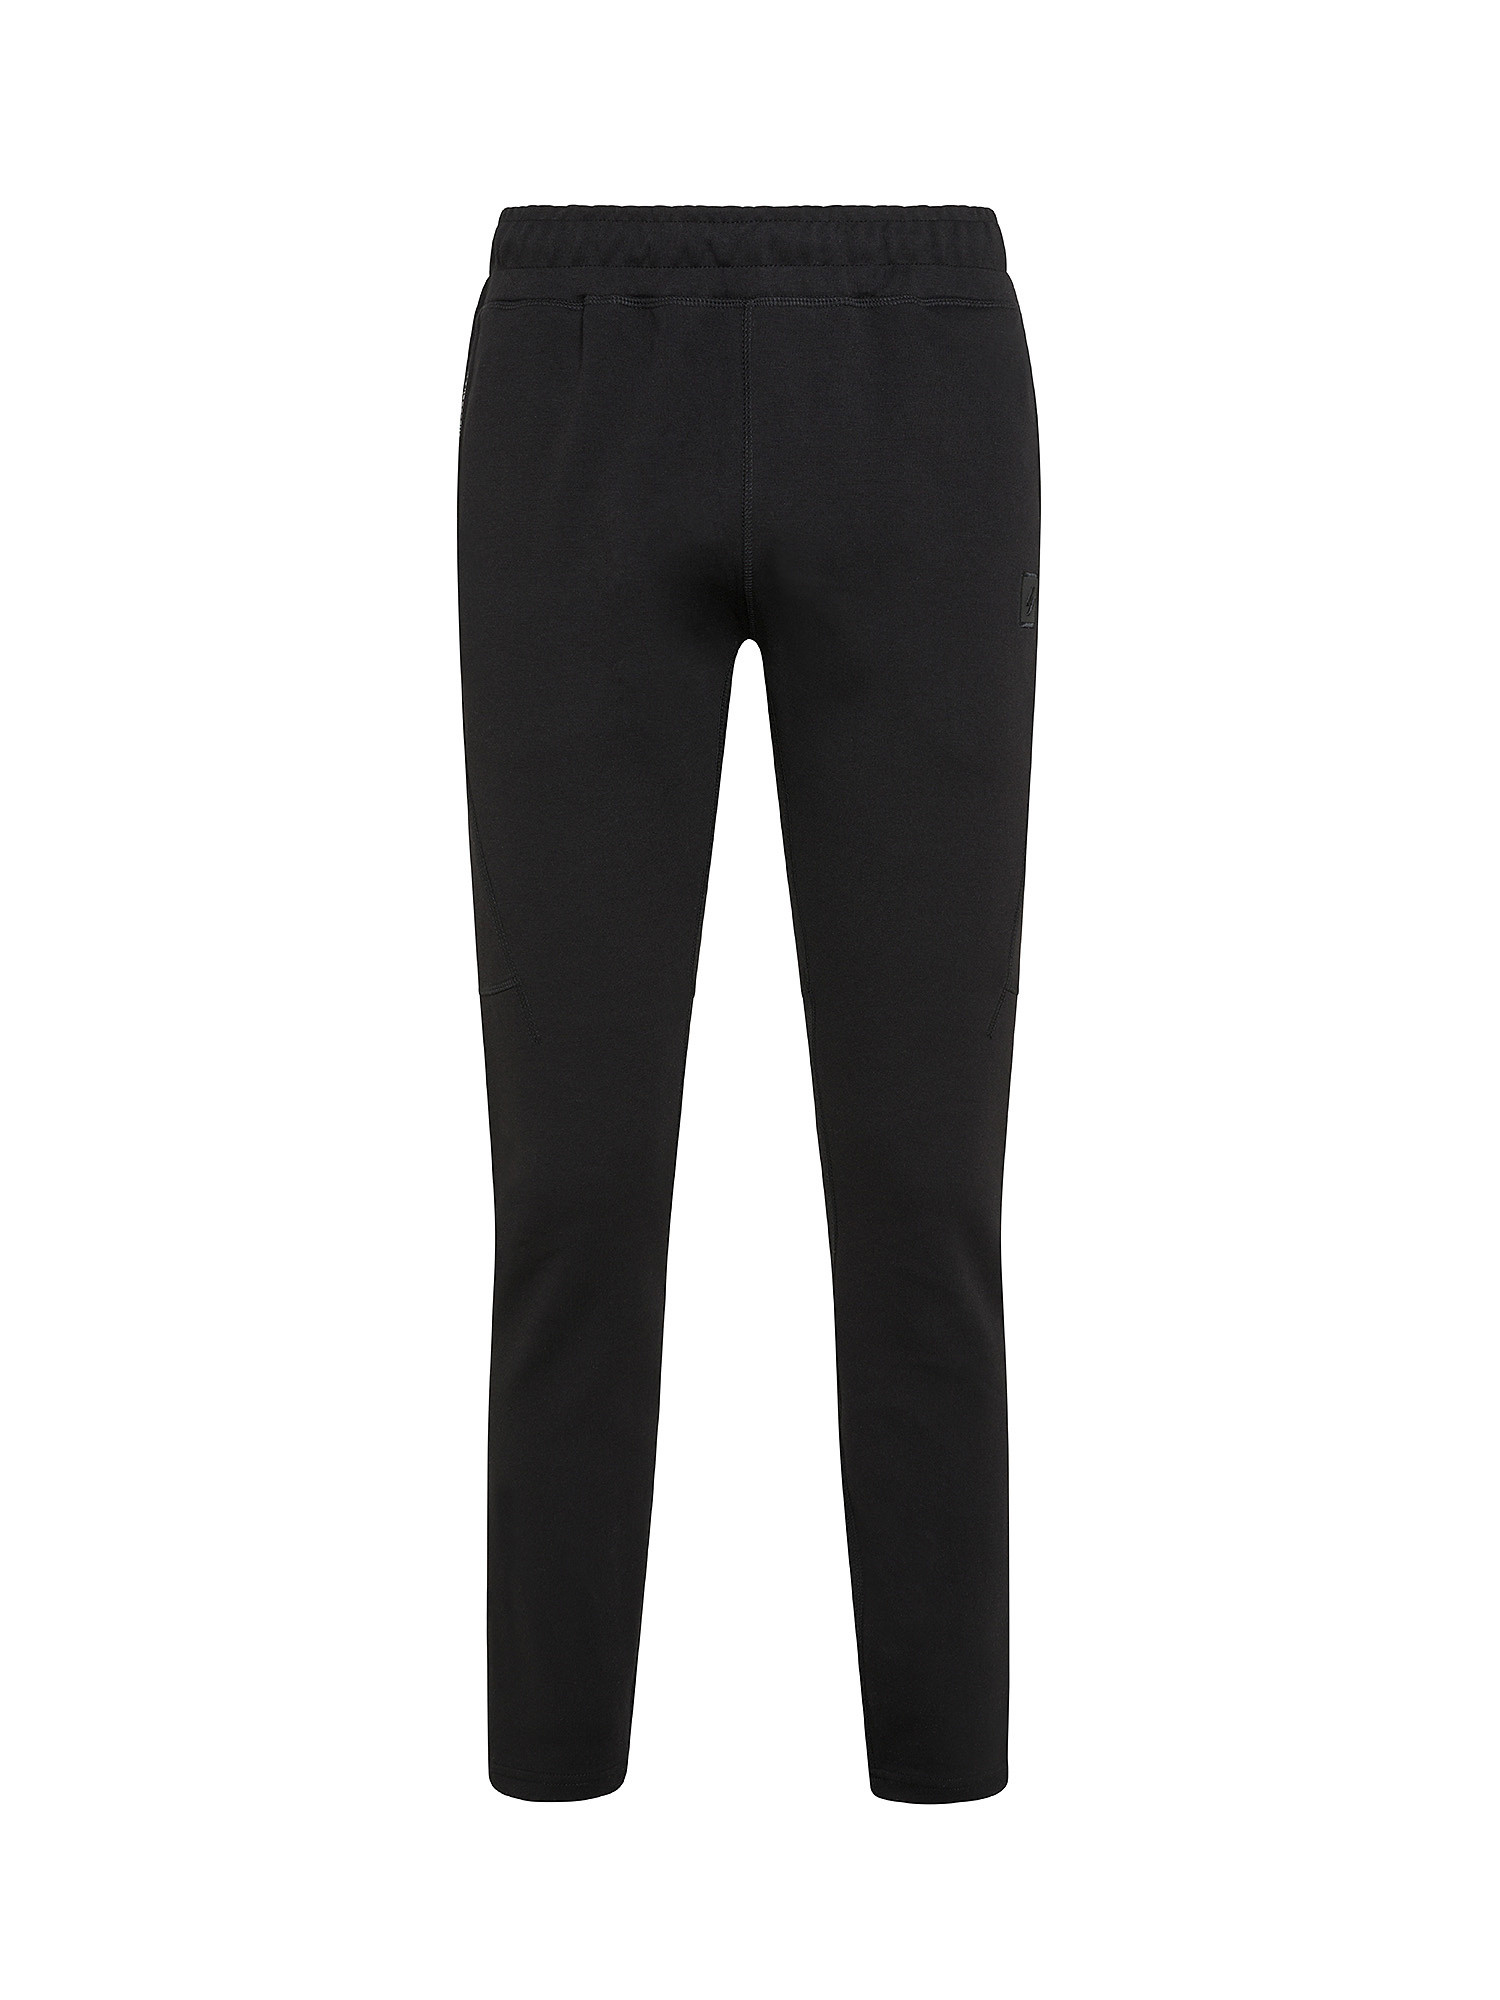 Superdry - Pantalone tuta slim fit, Nero, large image number 0